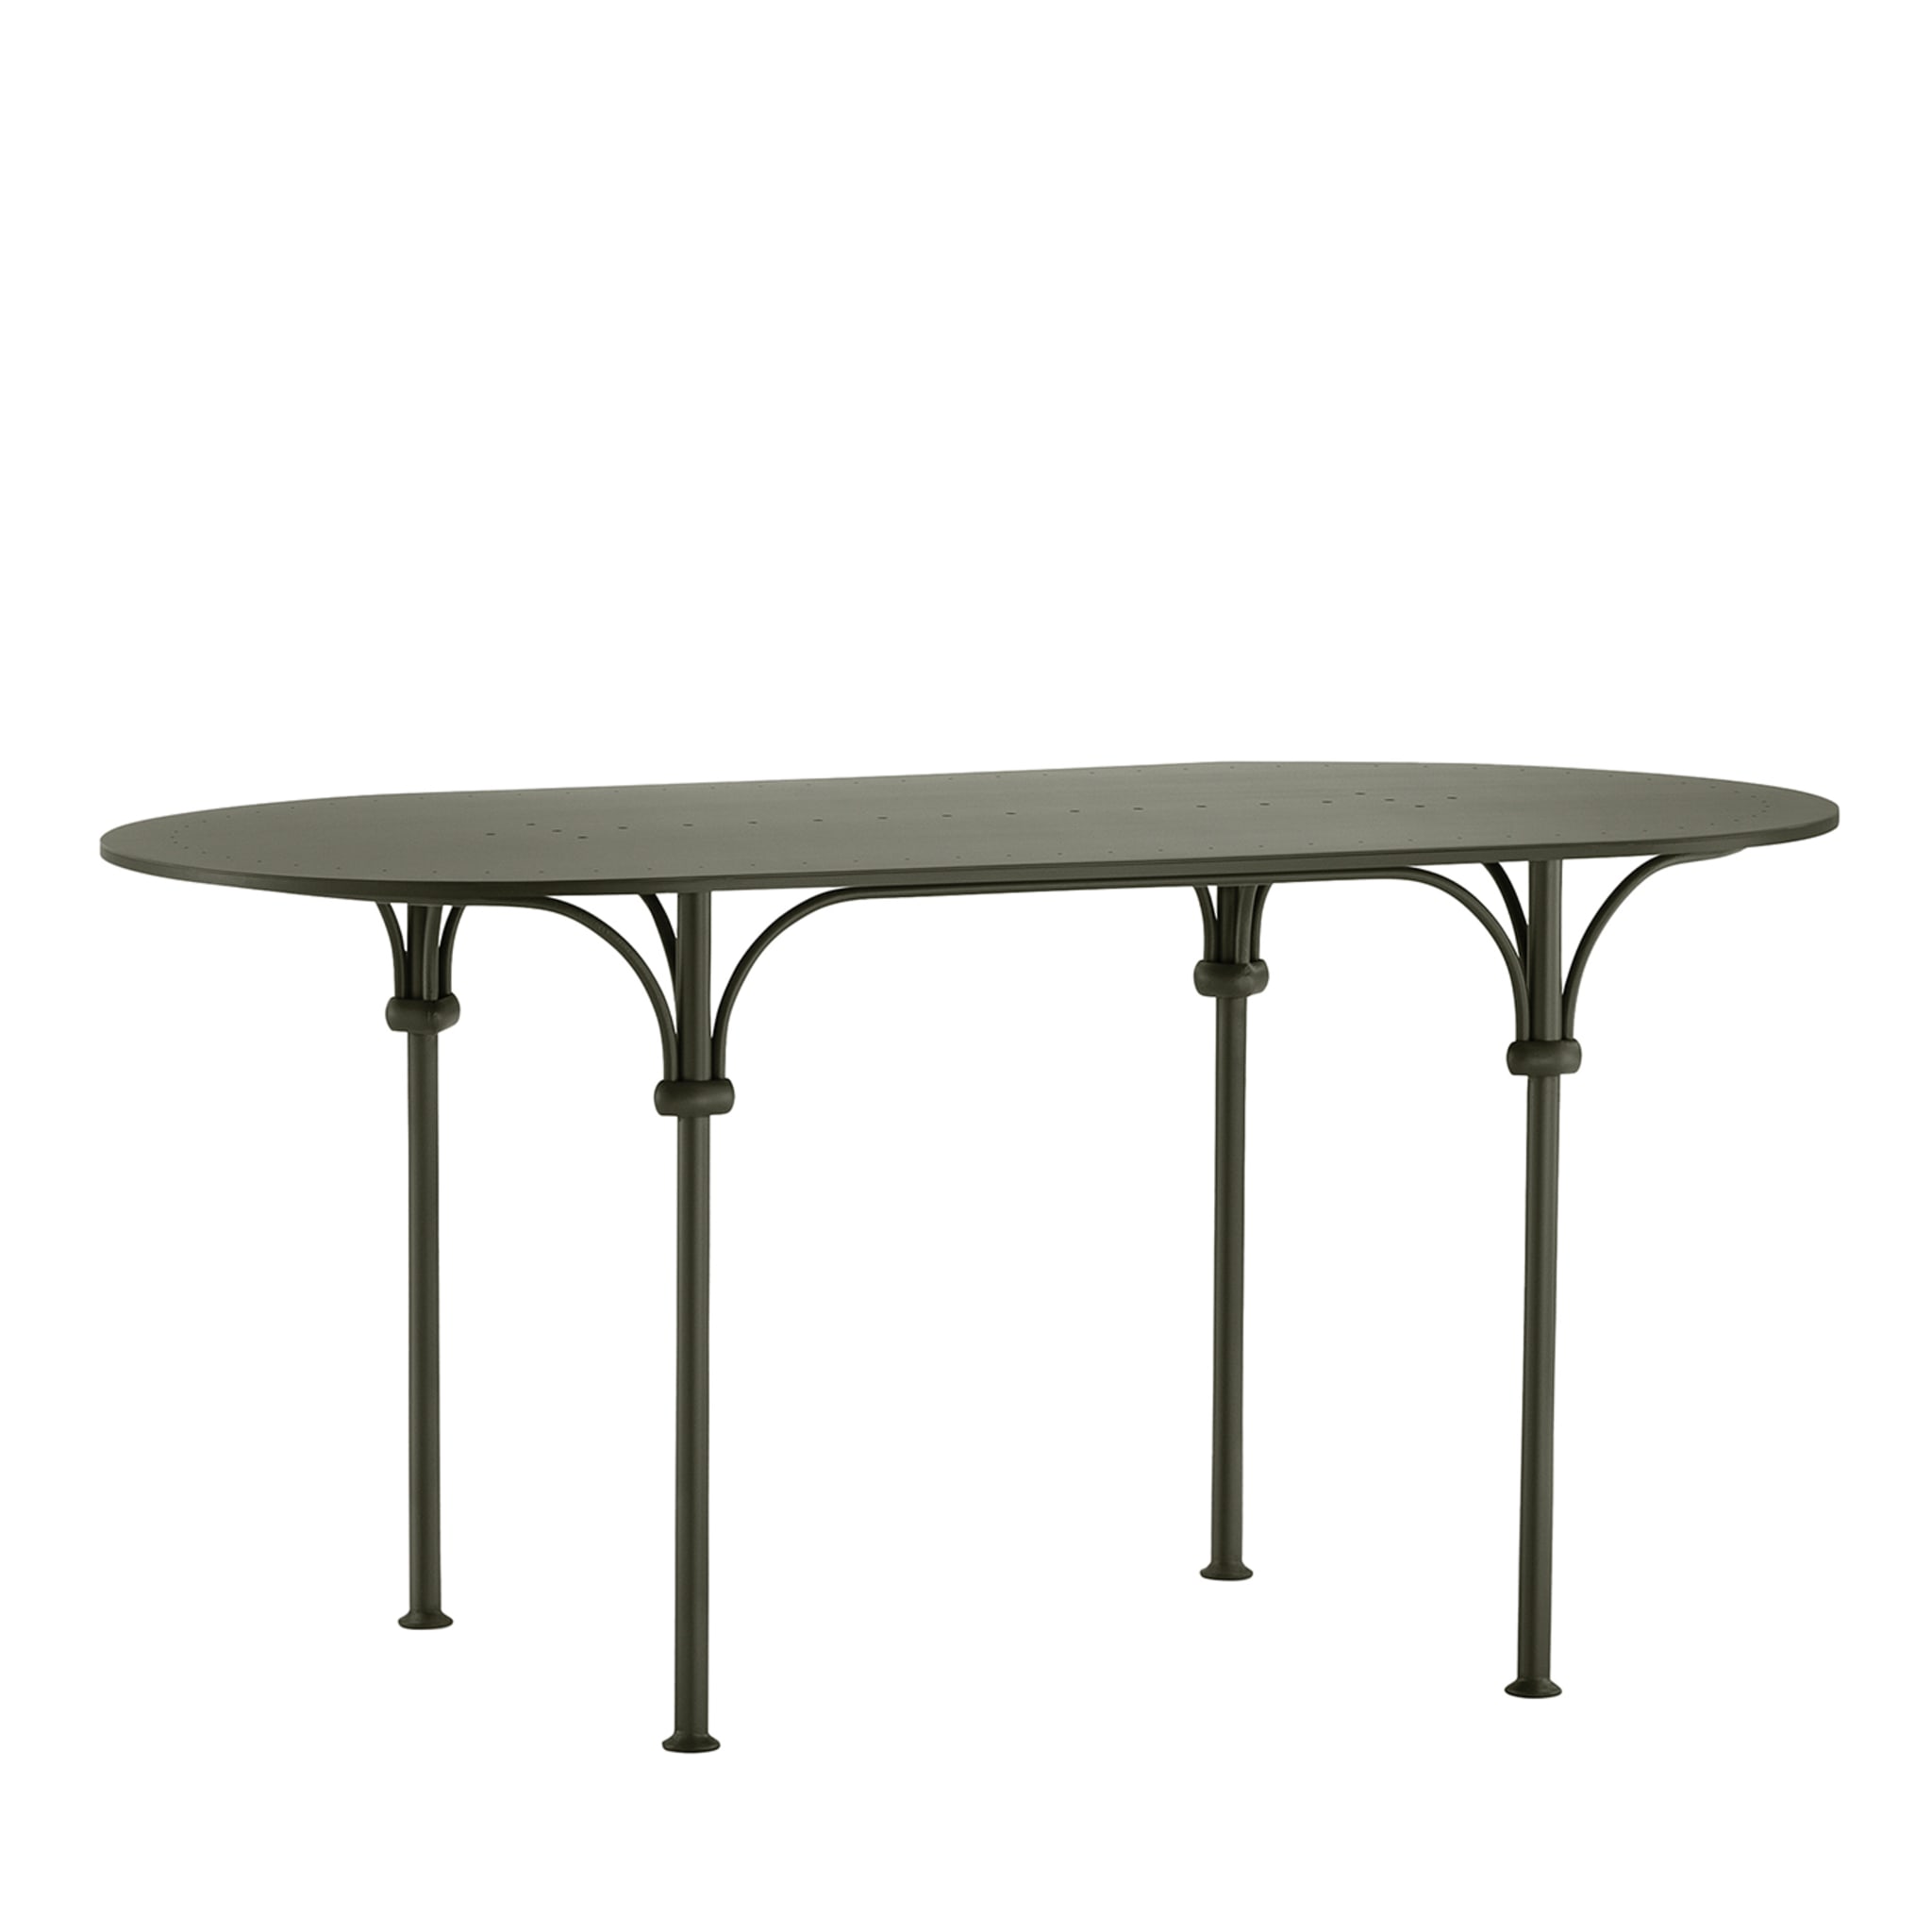 Tavolario Wrought Iron Green Oval Table - Main view